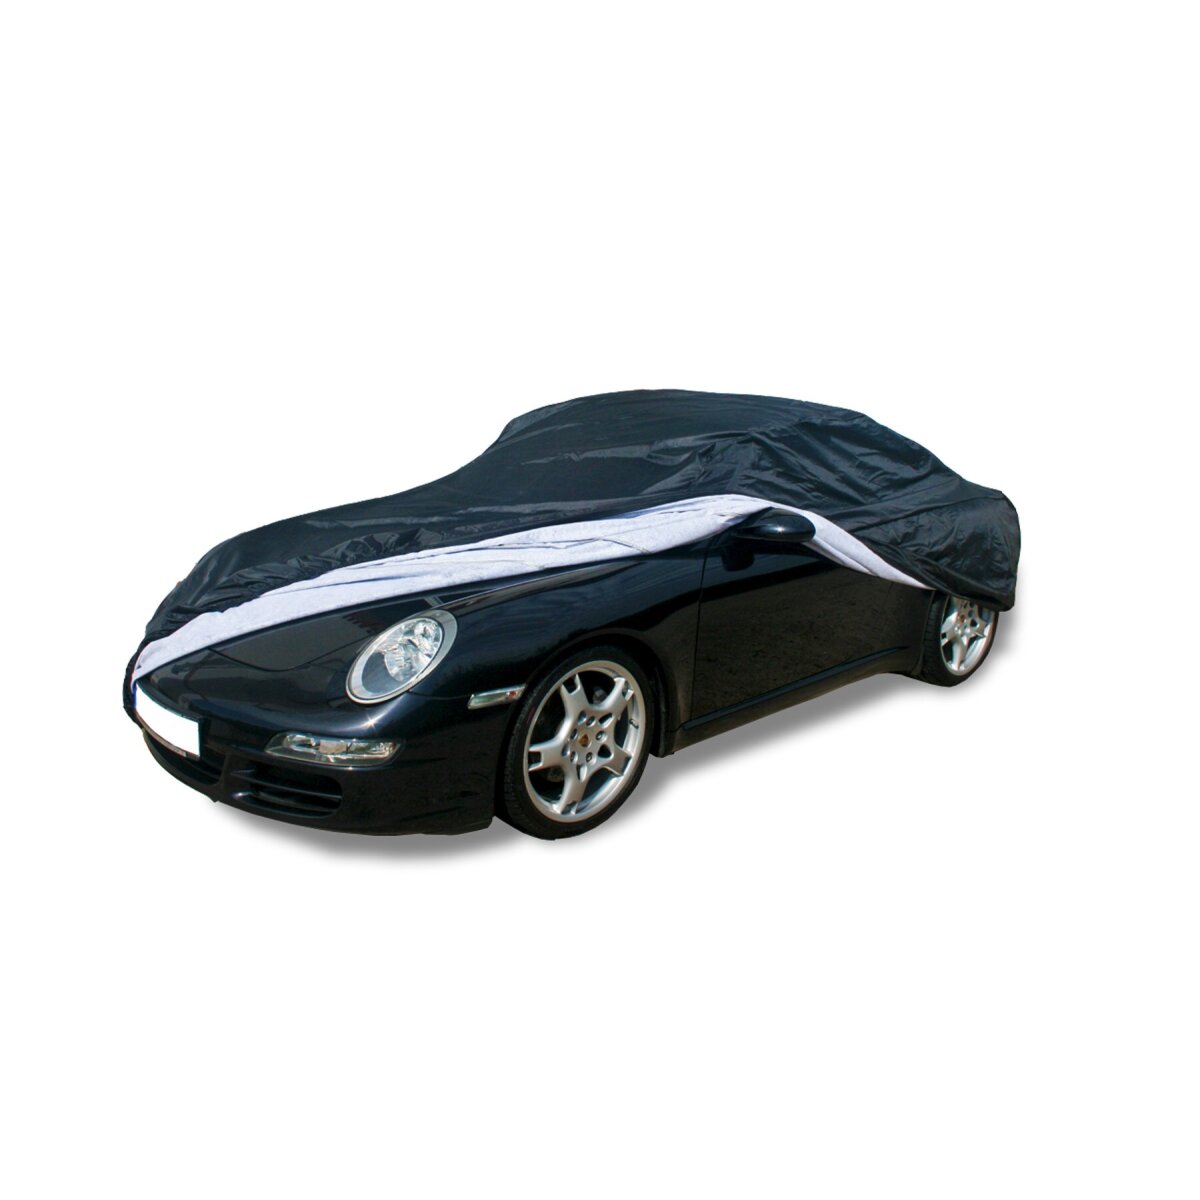 https://www.autoabdeckung.com/media/image/product/11949/lg/premium-autoabdeckung-outdoor-car-cover-fuer-audi-rs3-limousine-8va.jpg